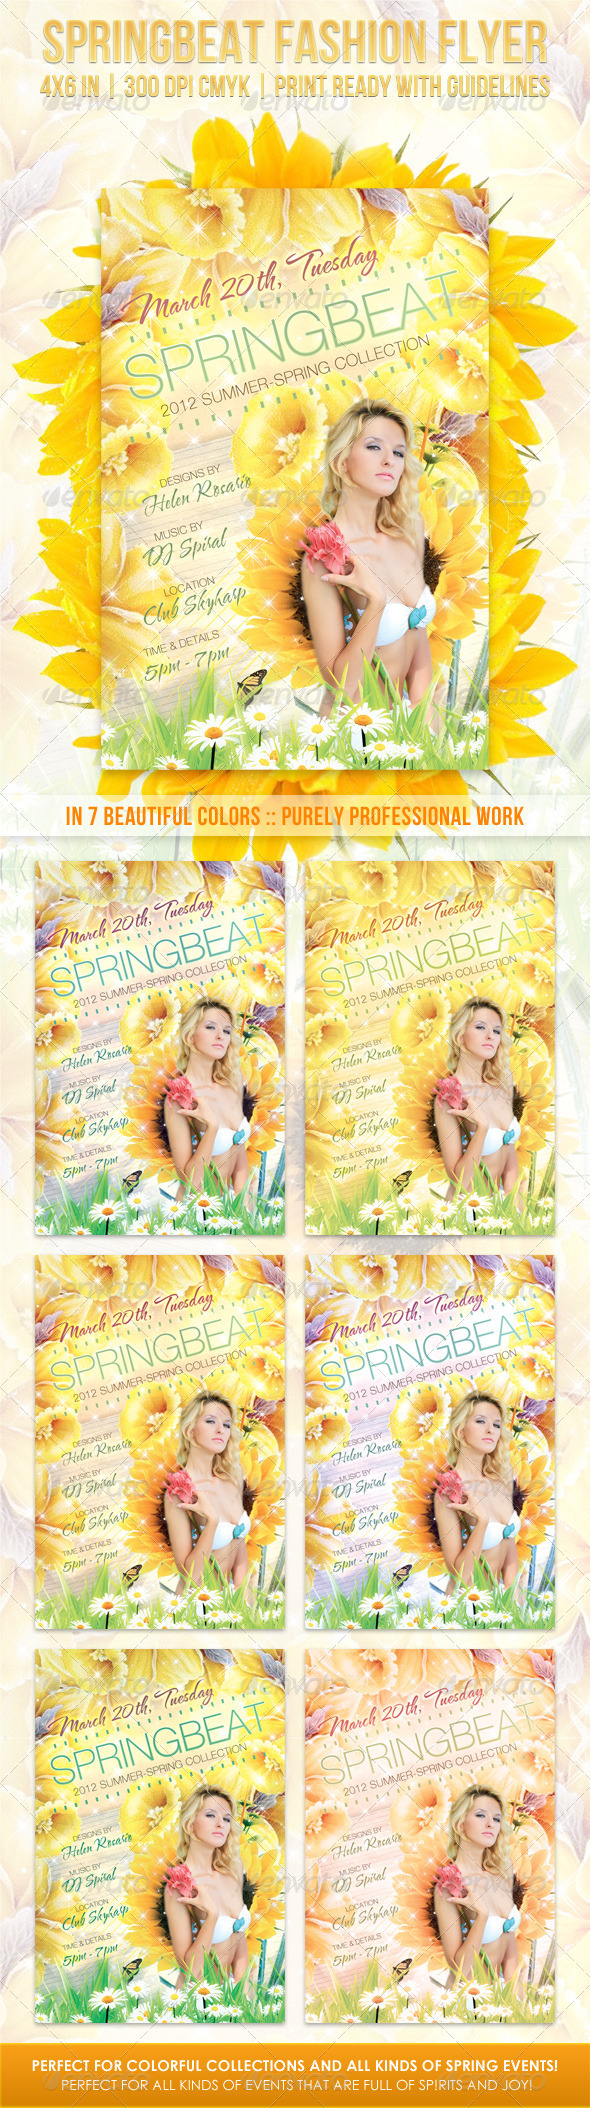 Springbeat Spring Fashion Flyer